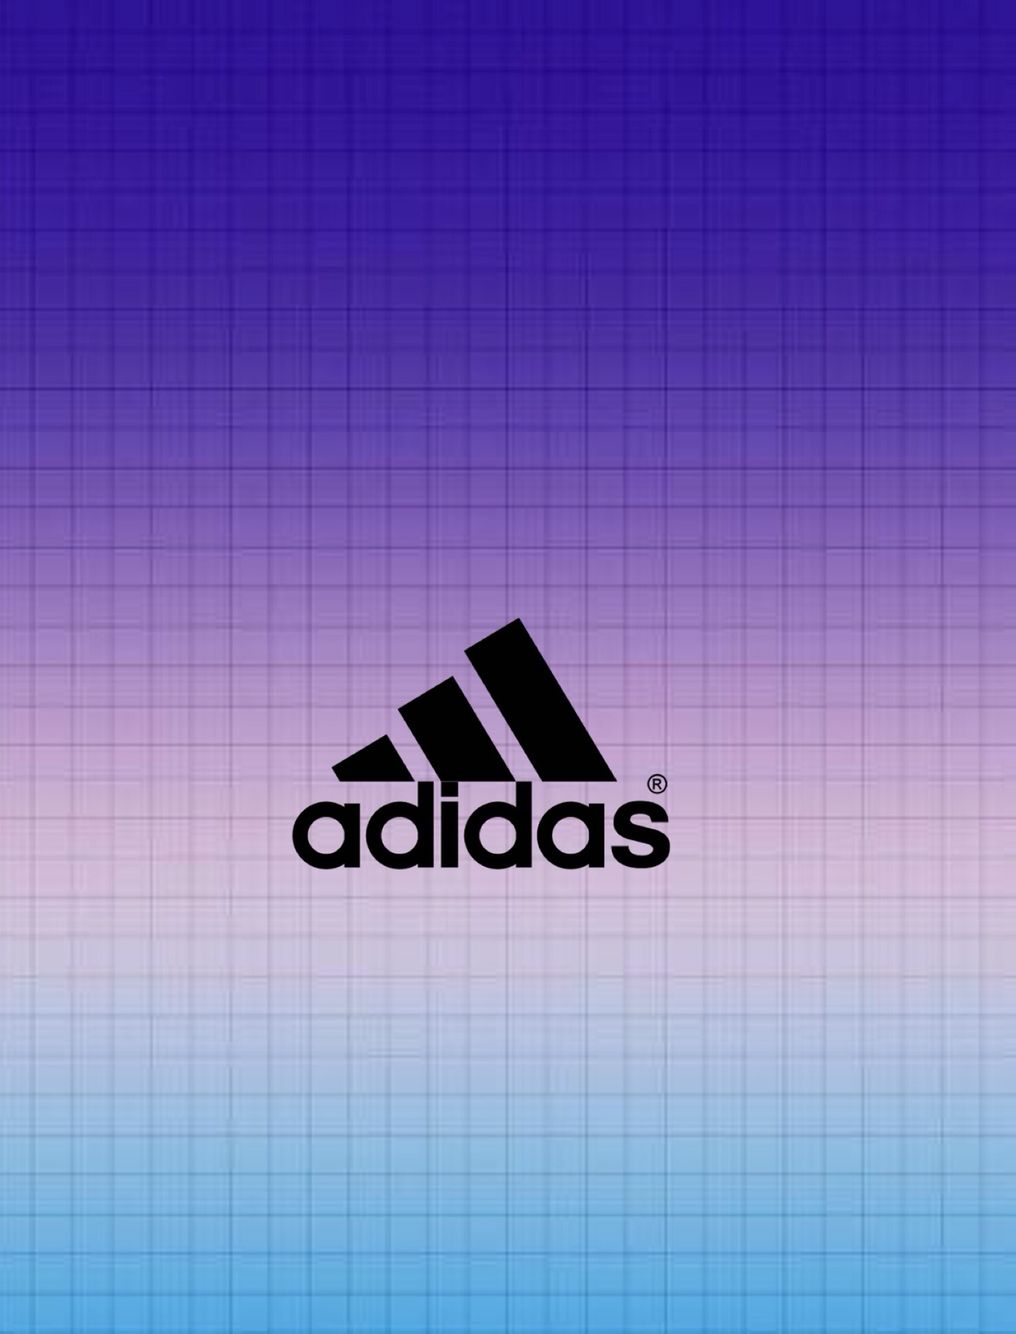  Adidas Hintergrundbild 1016x1334. Adidas aesthetic wallpaper. Adidas, Adidas wallpaper, Adidas aesthetic